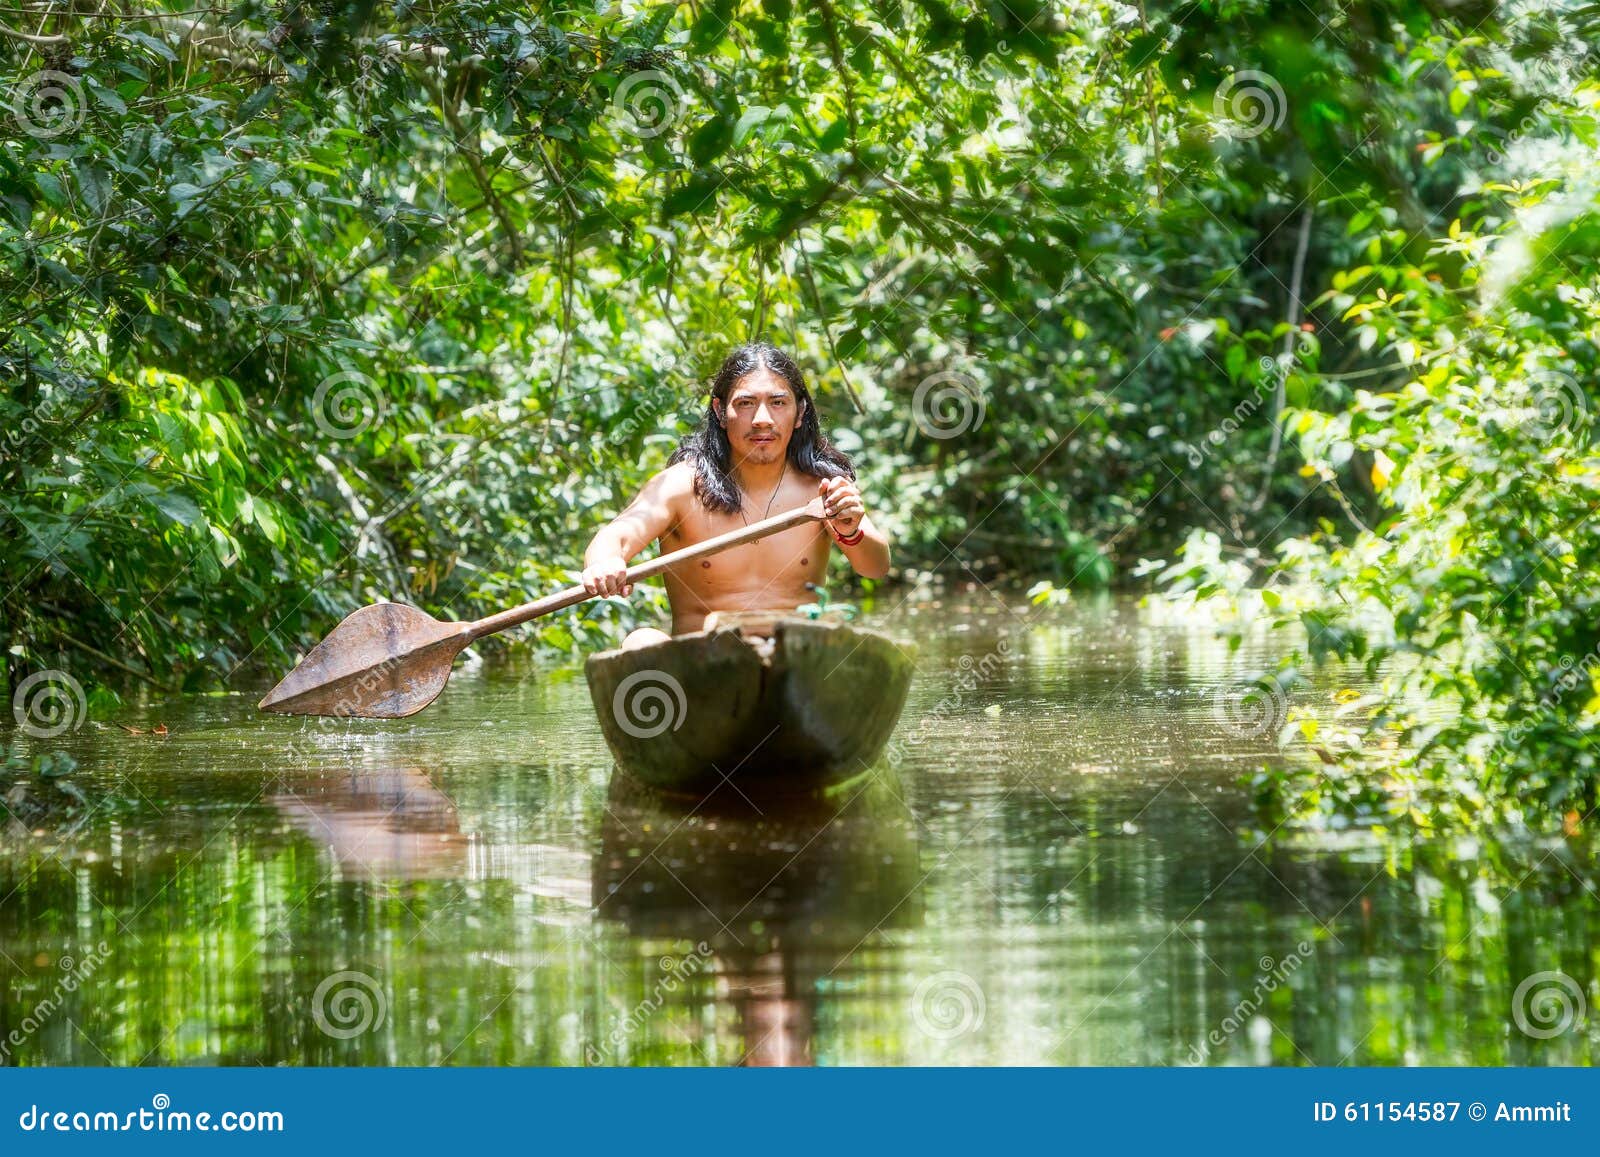 indigenous wooden canoe